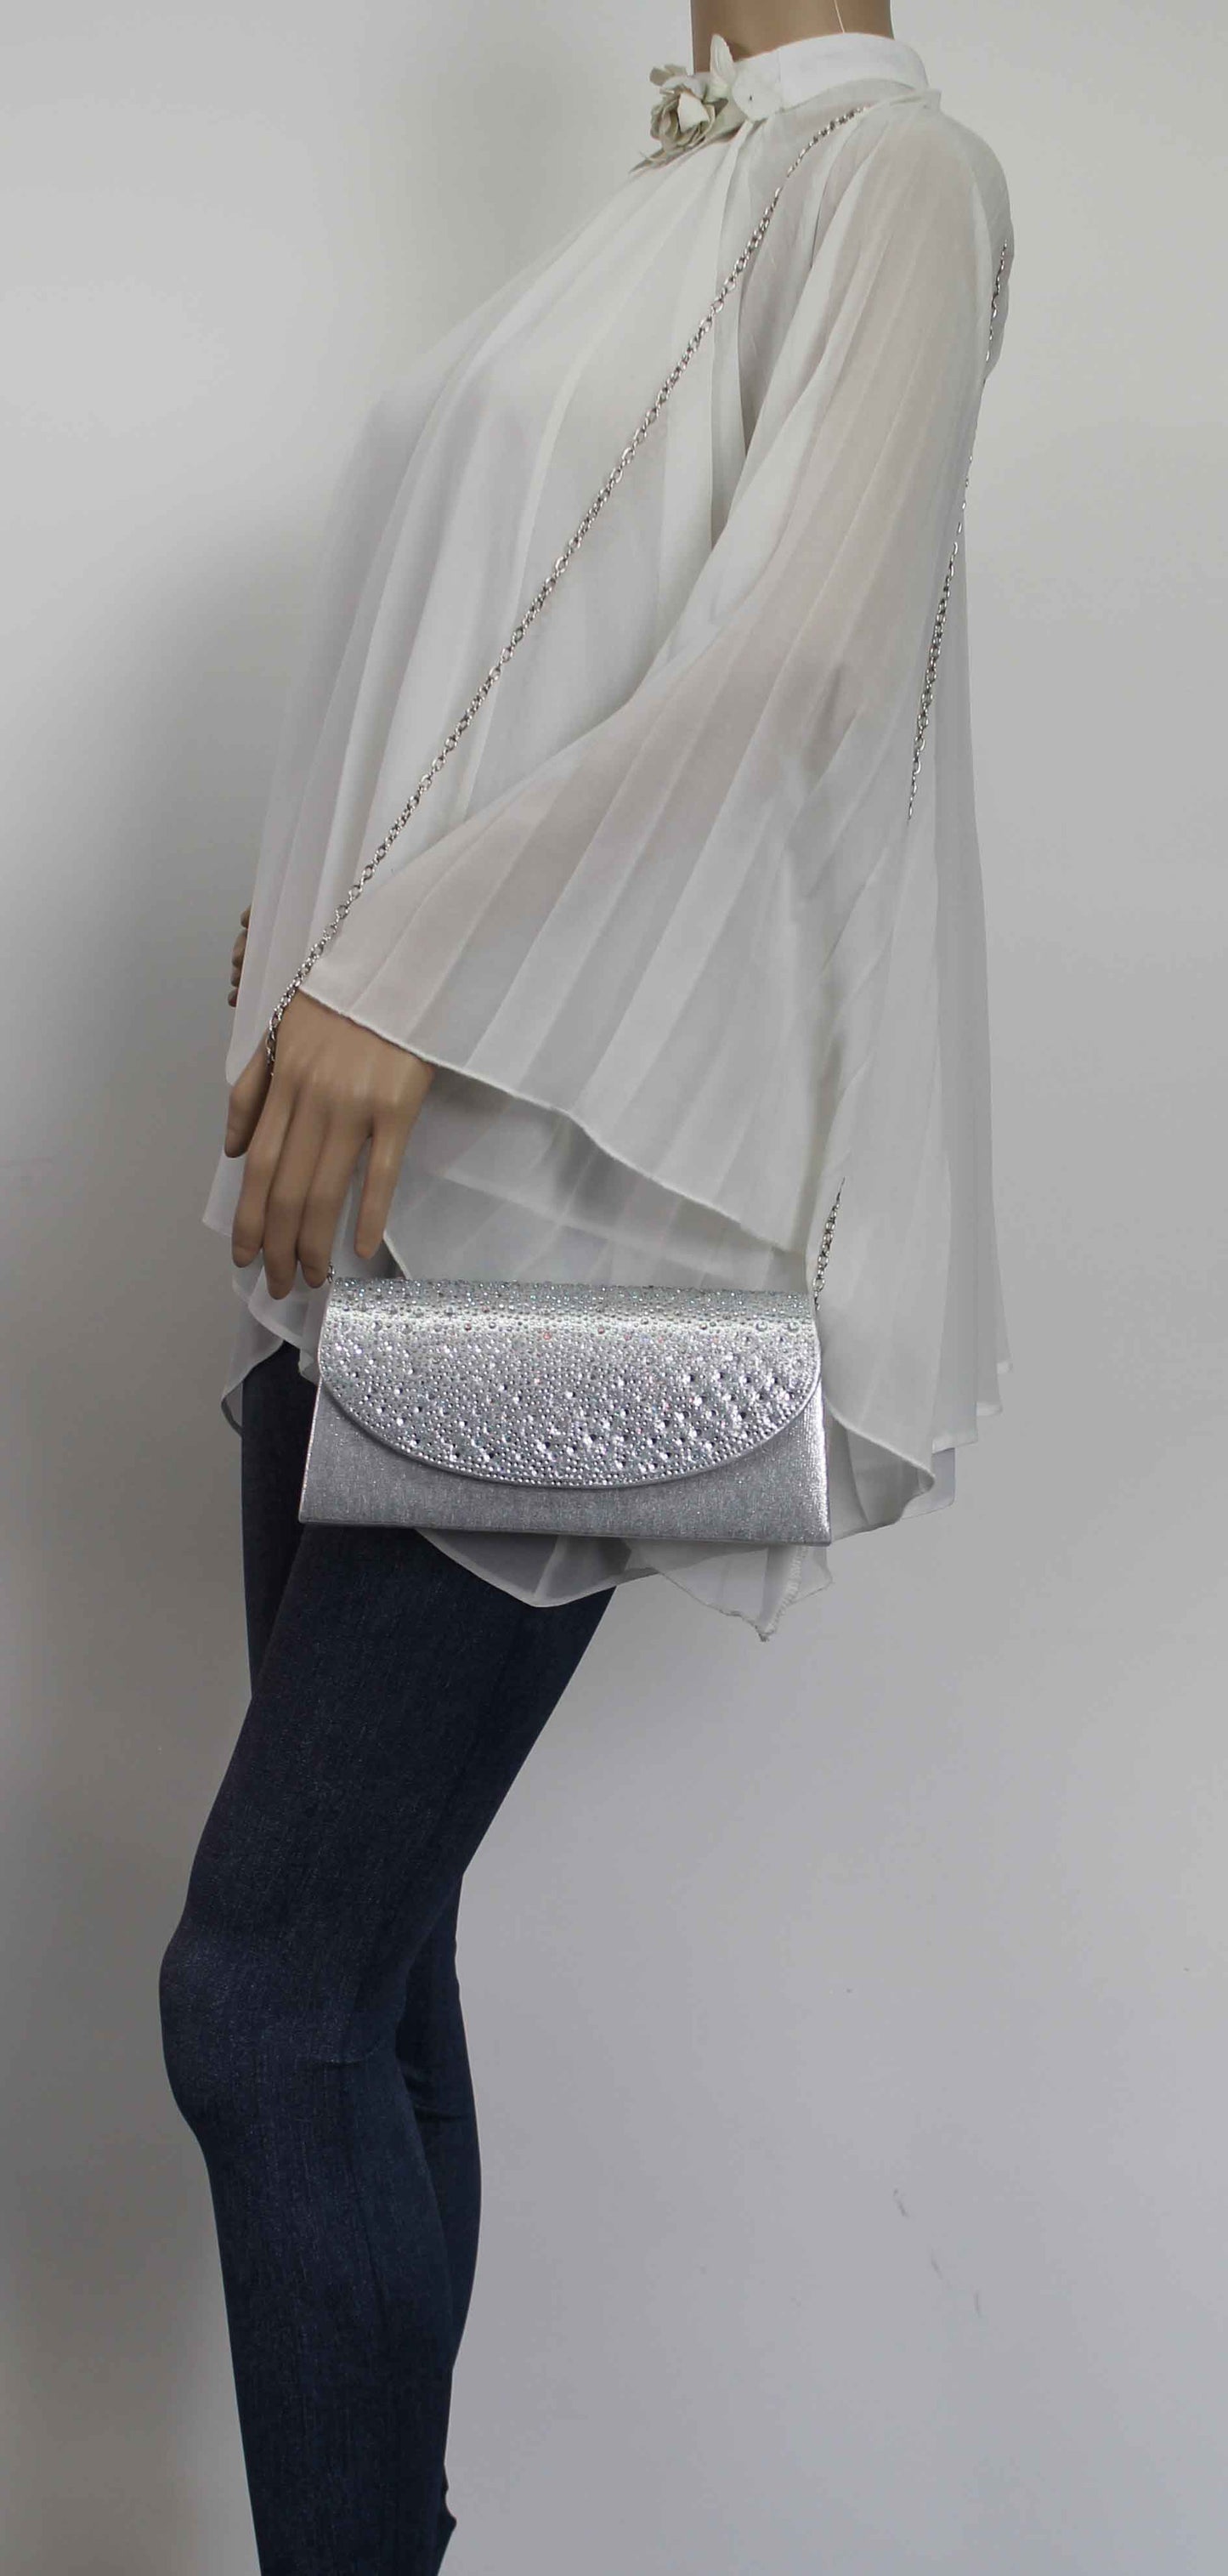 SWANKYSWANS Rita Diamante Clutch Bag Silver Cute Cheap Clutch Bag For Weddings School and Work